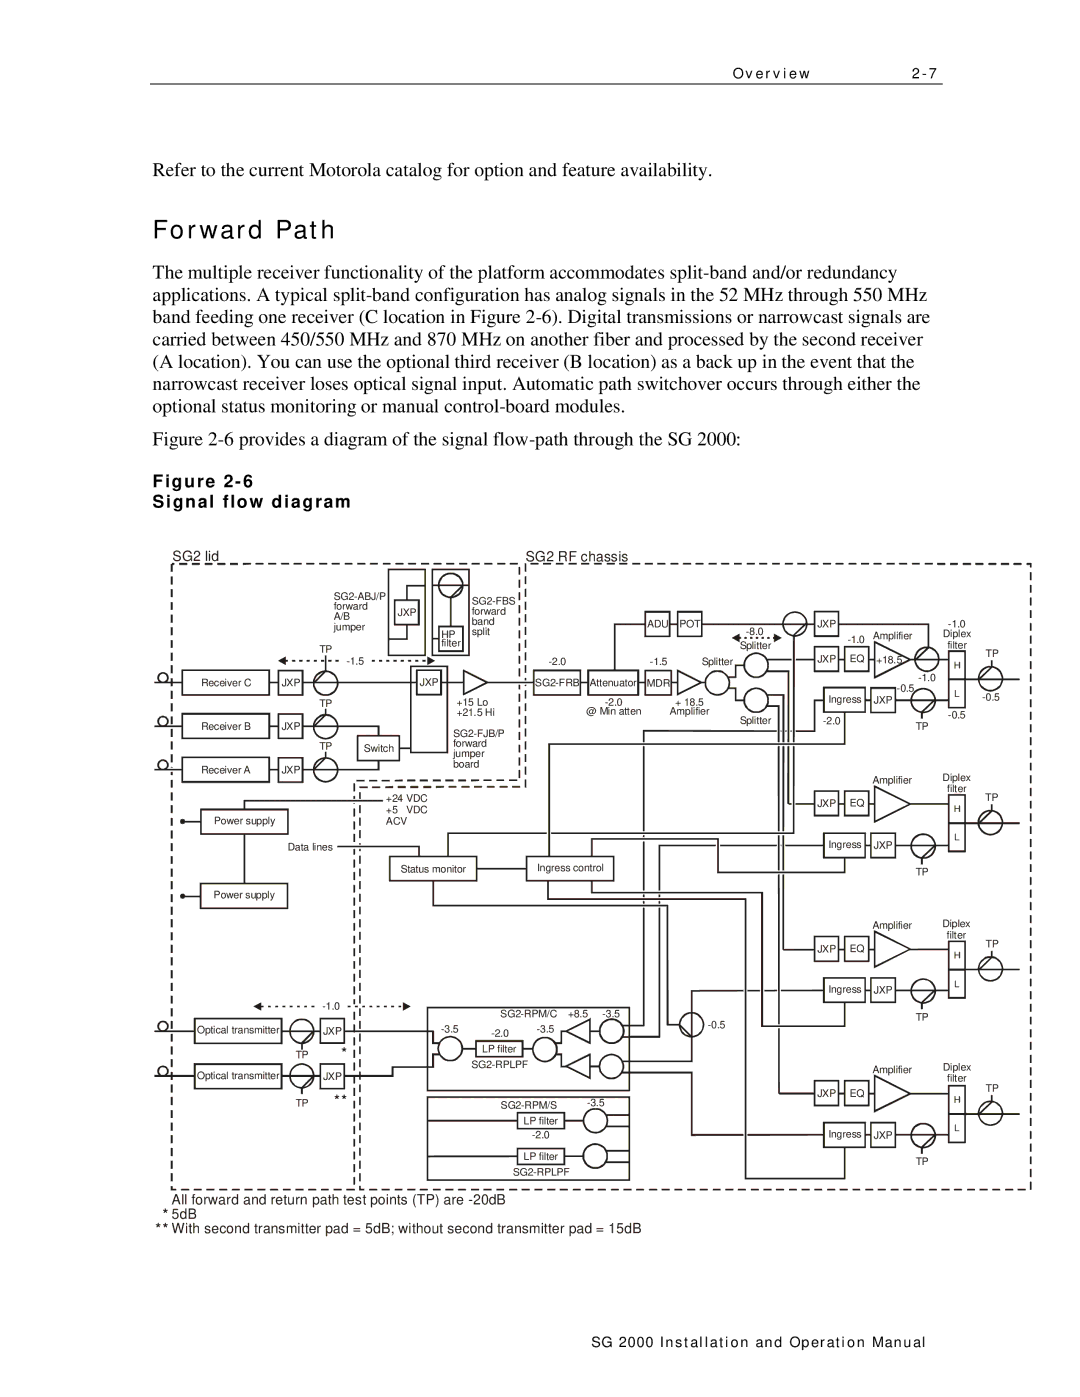 Motorola SG 2000 operation manual Forward Path, Signal flow diagram 